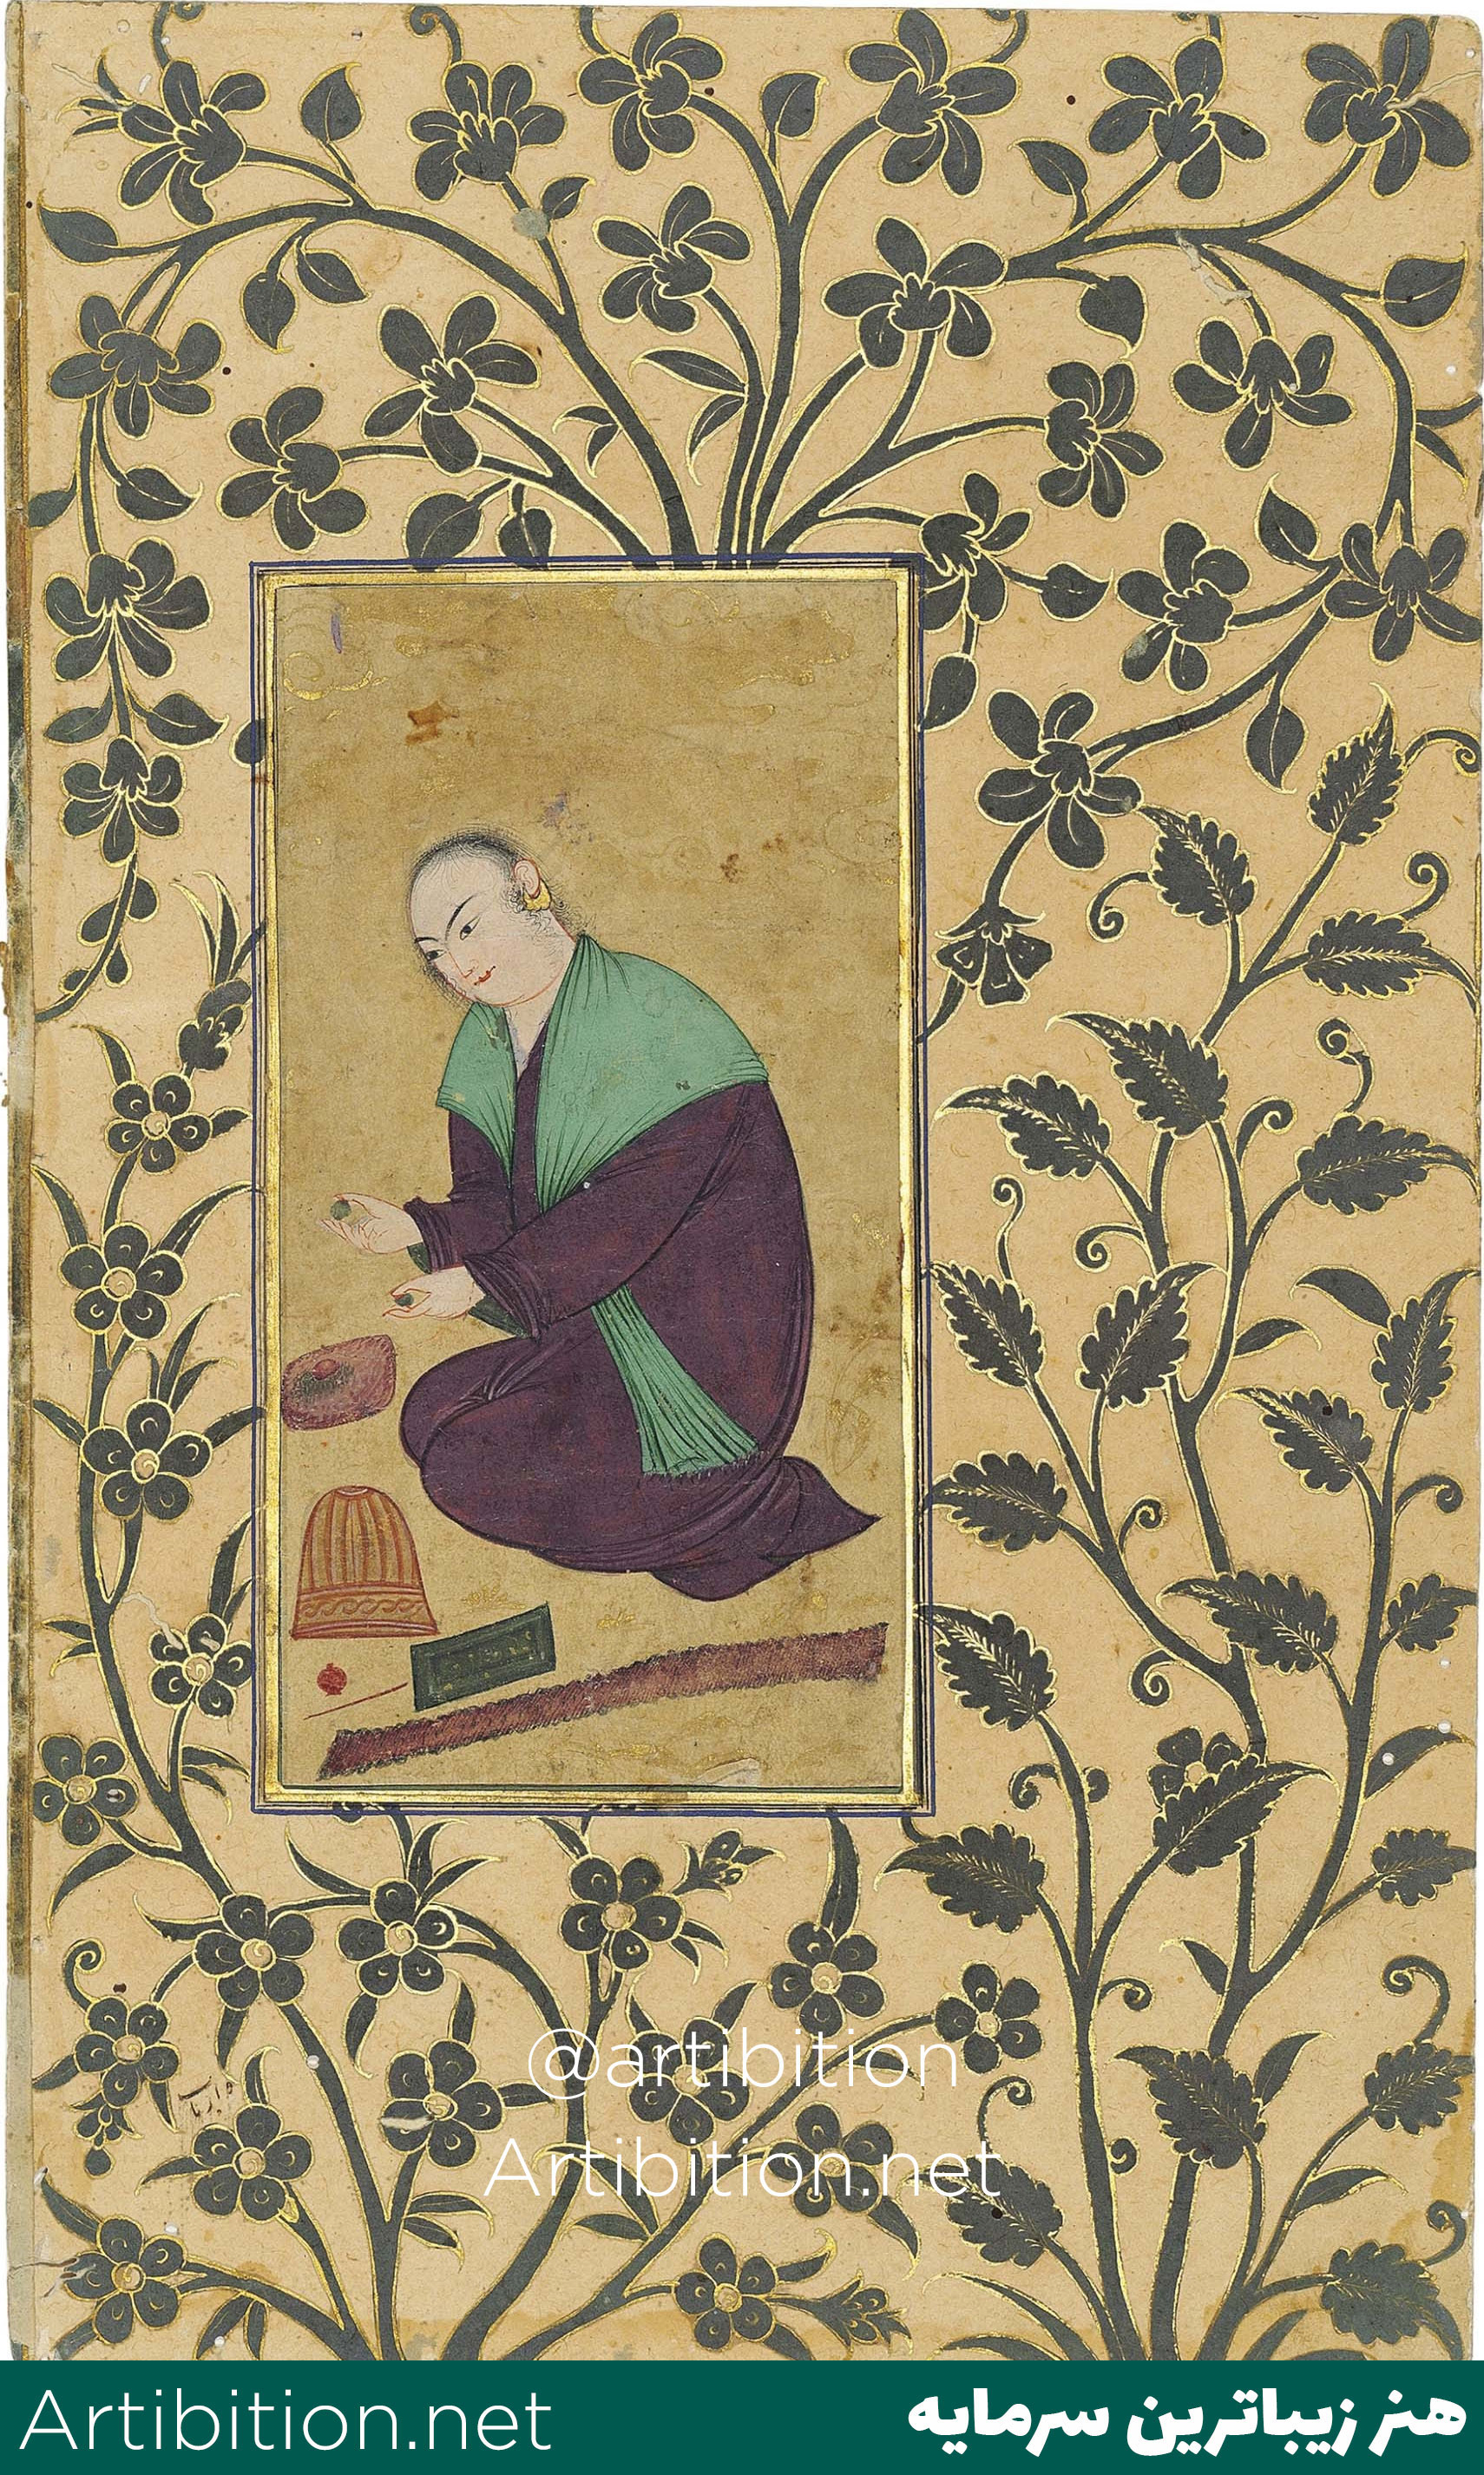 تصویر یک صوفی، سبک معین مصور، ایران دوره صفوی، اویل قرن 17